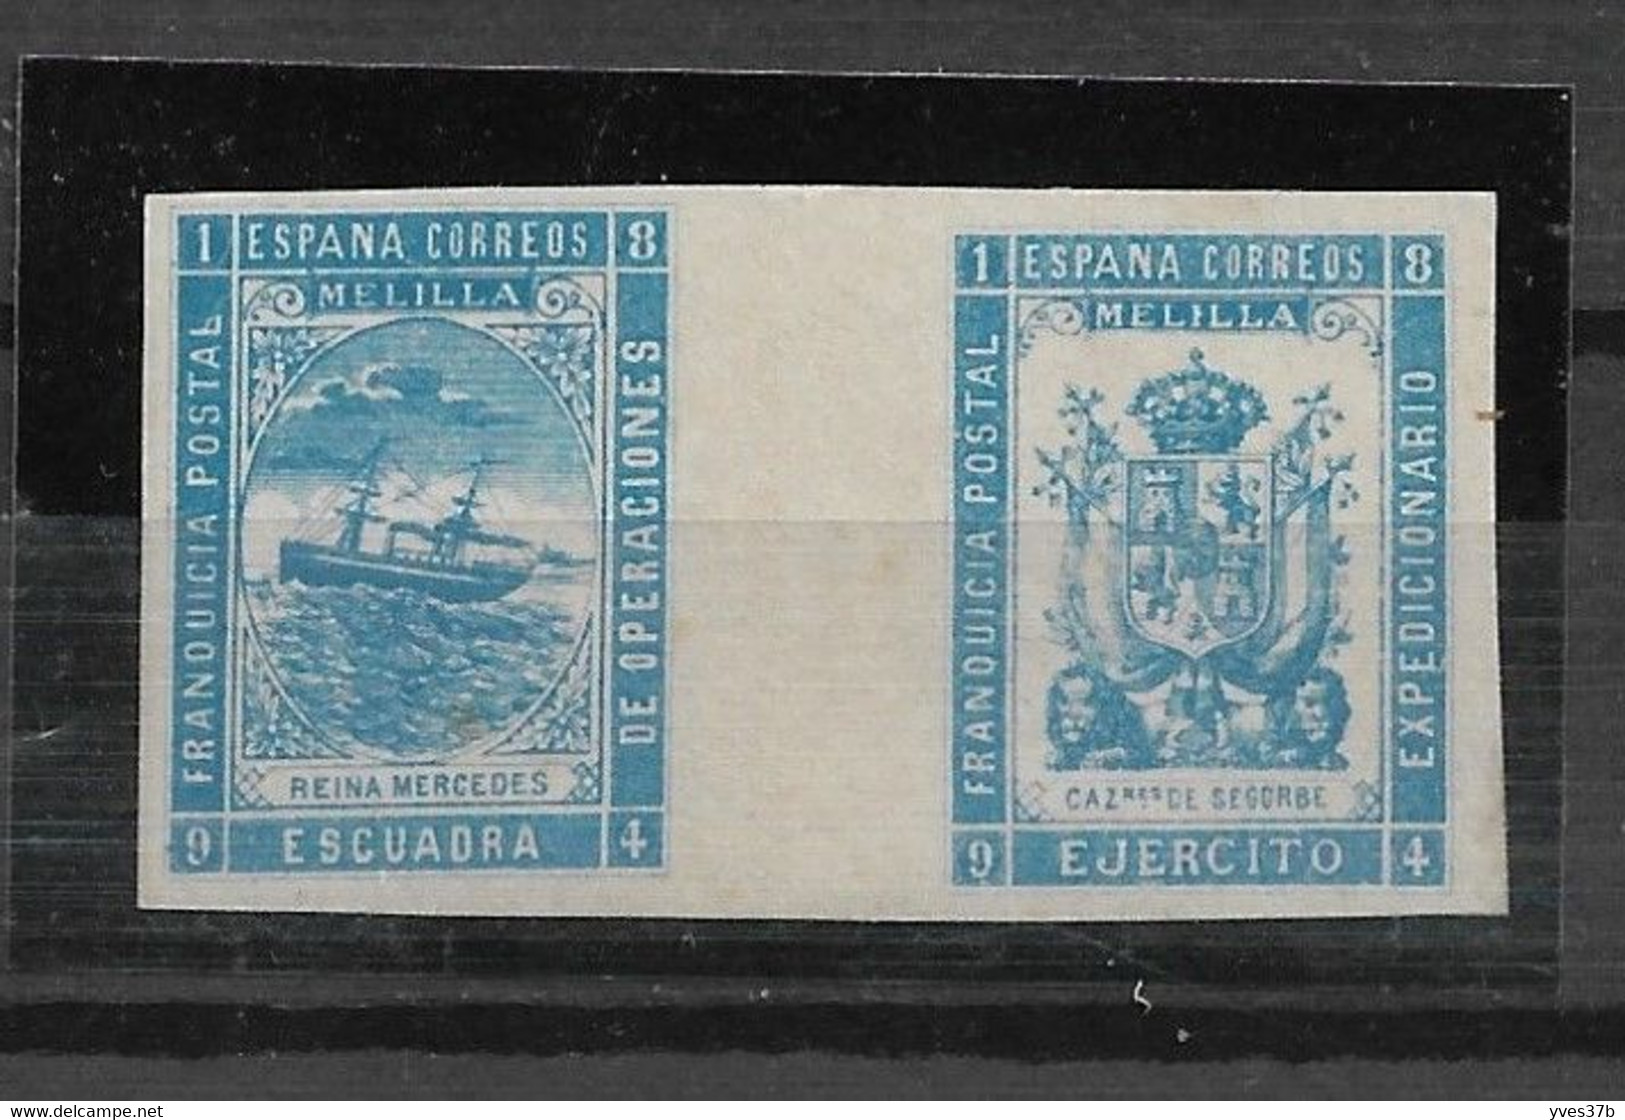 ESPAGNE - MELILLA 1894 - N°17 (Reina Mercedes) & N°27 (de Segorge) "paires Inter-panneau" - Neufs** - SUP - - Militärpostmarken